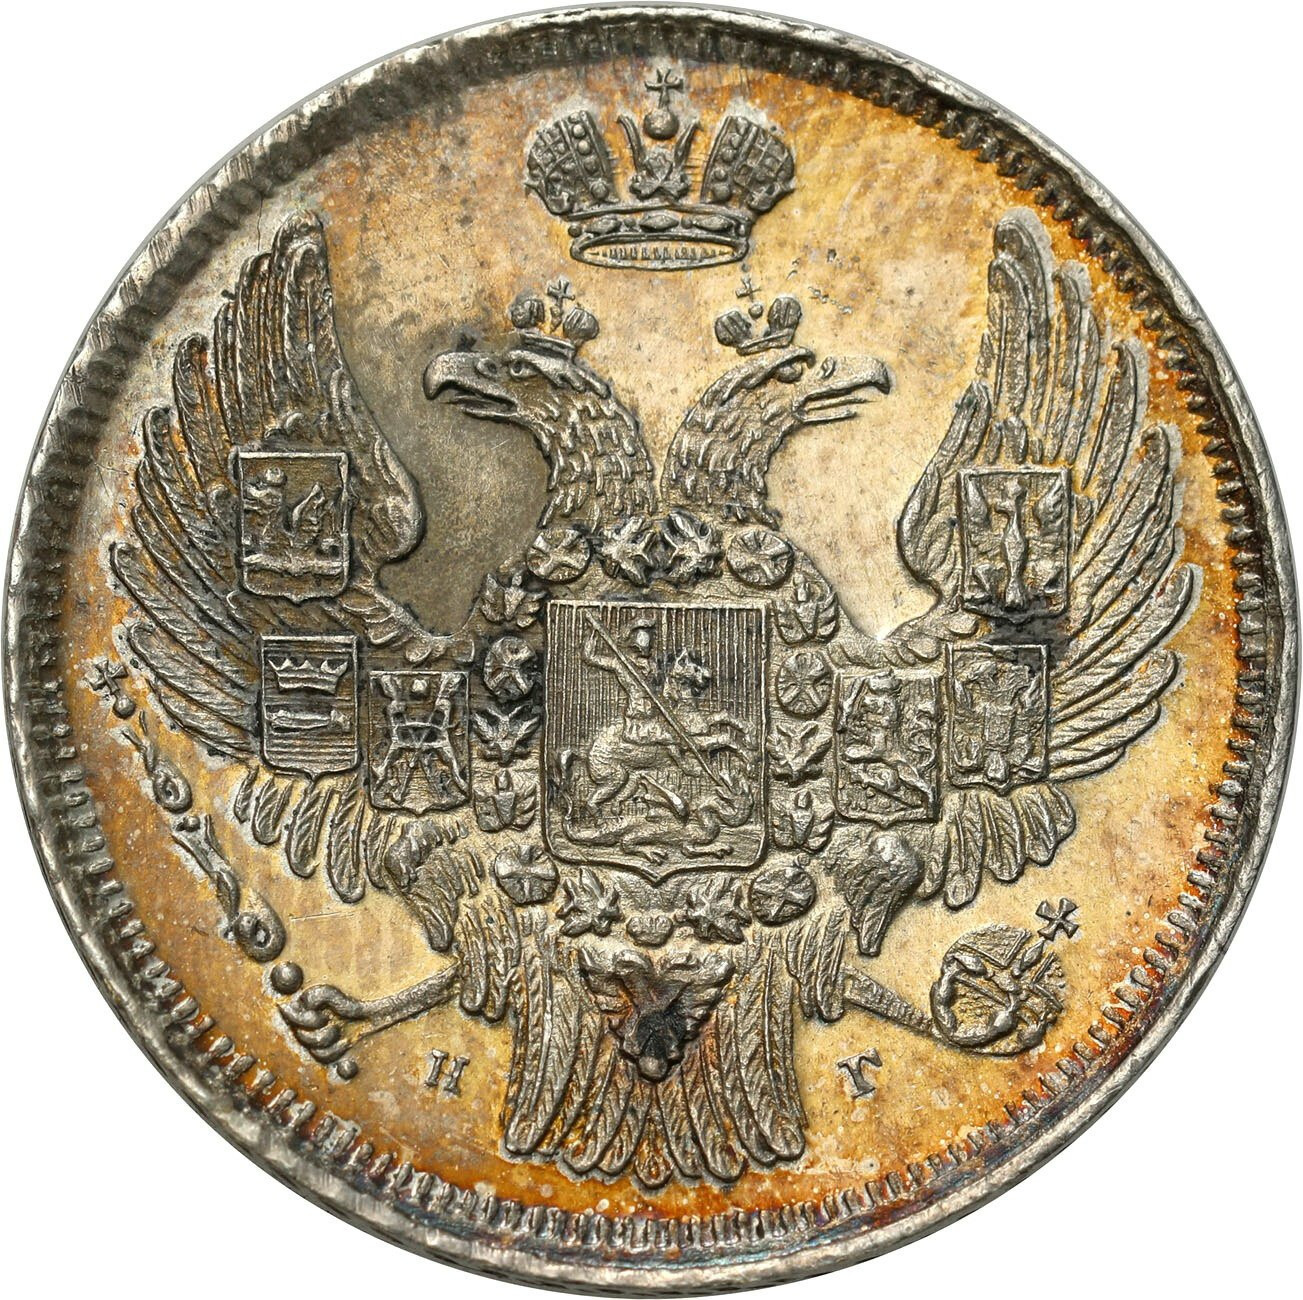 Polska XIX w. / Rosja. 15 kopiejek = 1 złoty 1832 НГ, Petersburg - PROOF LIKE